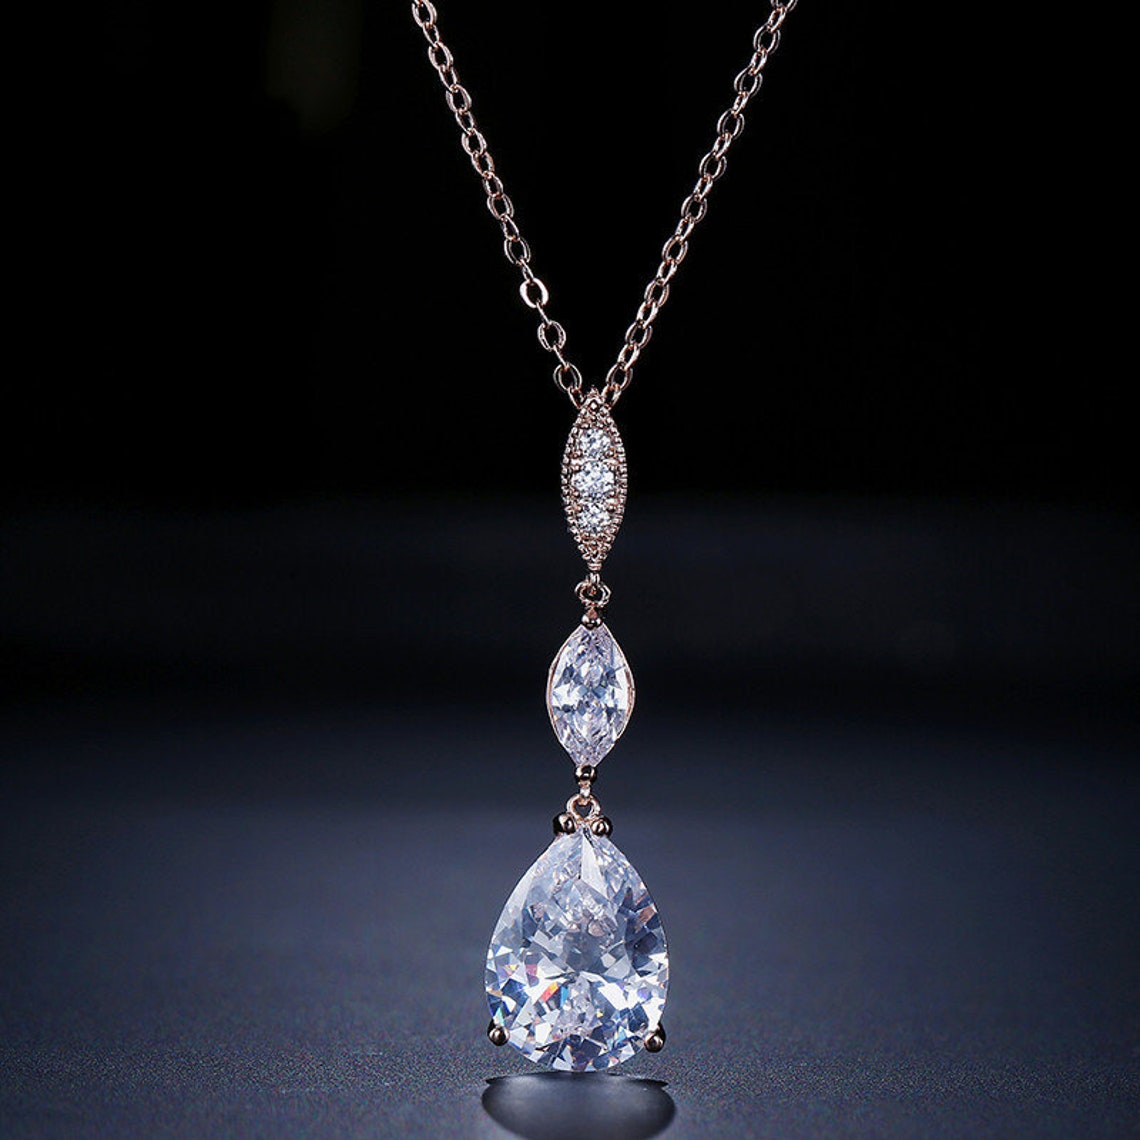 Water drop shape necklace diamond bride's pendant | Etsy